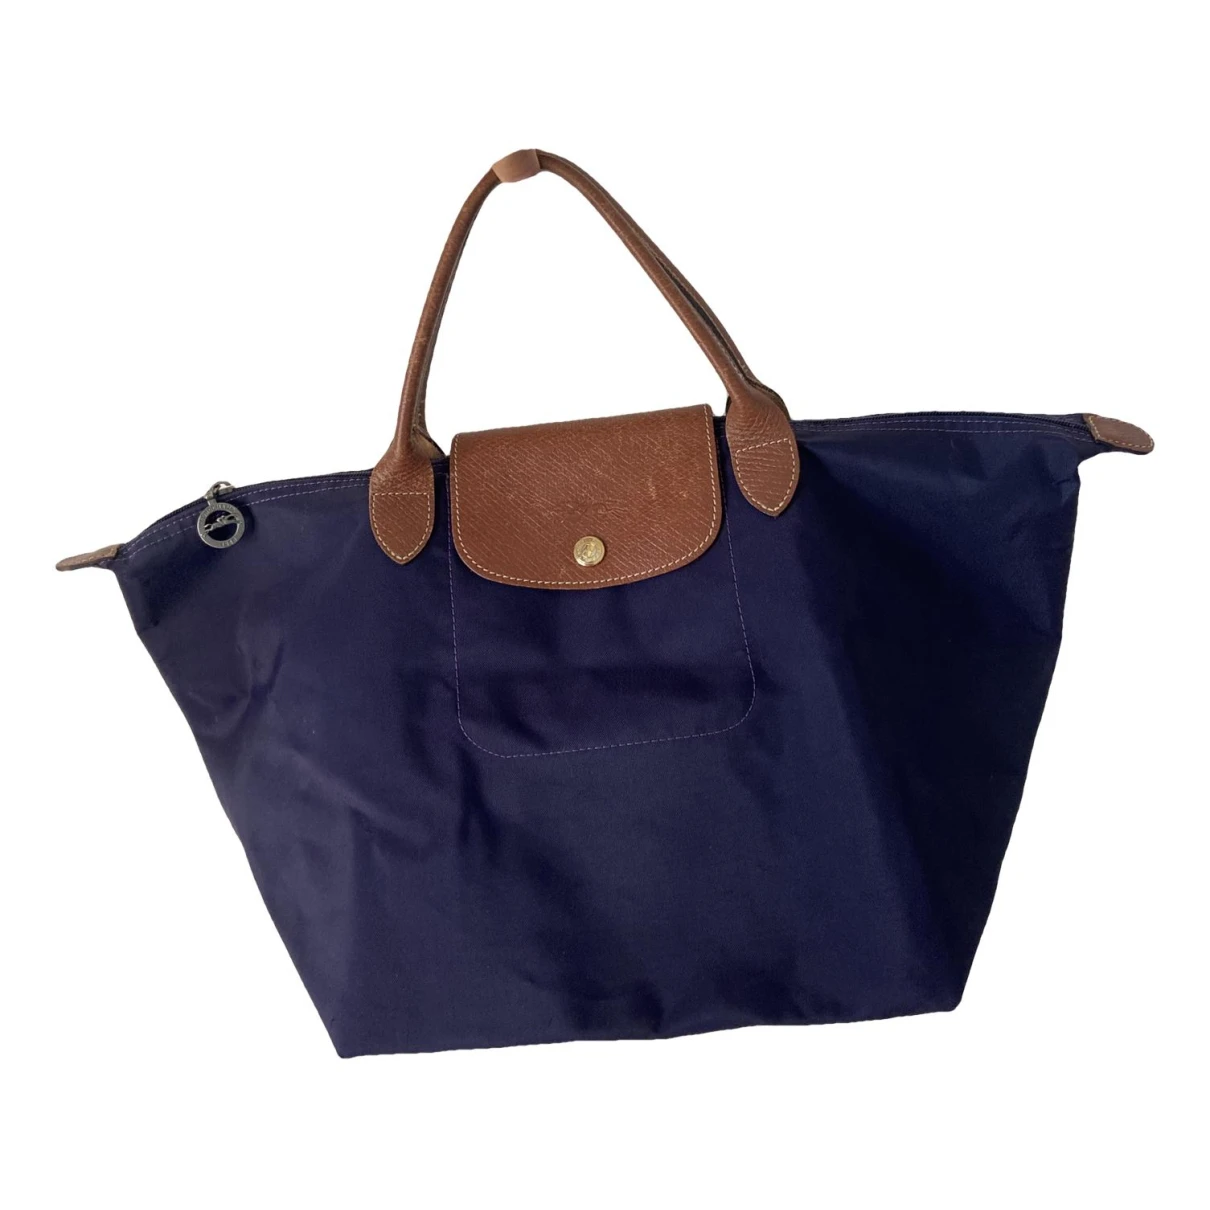 Pre-owned Longchamp Pliage Cloth Handbag In Purple